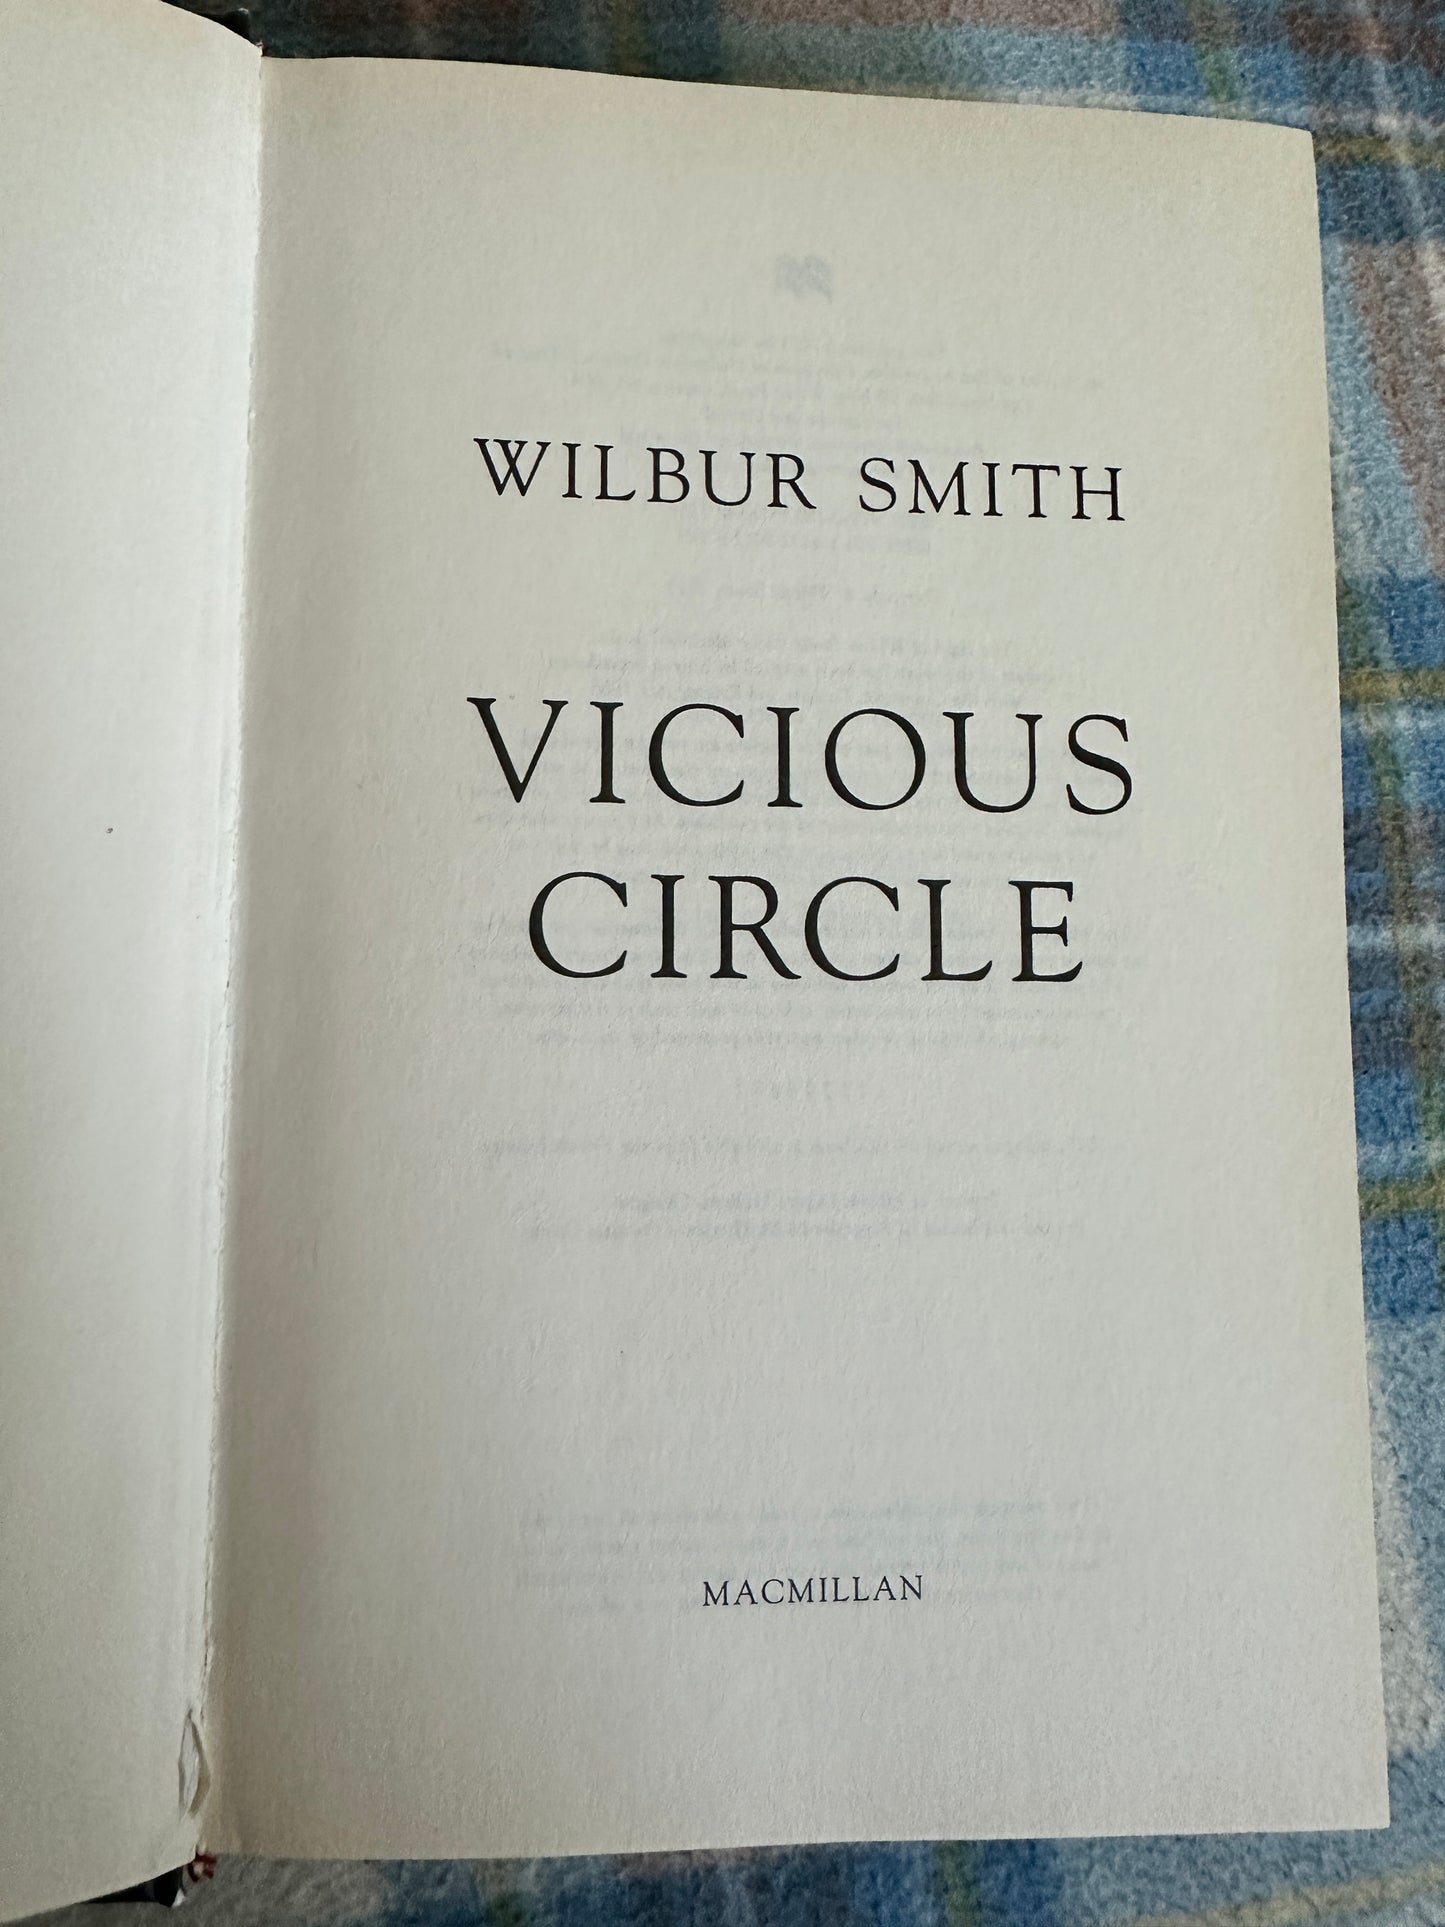 2013*1st* Vicious Circle - Wilbur Smith(MacMillan)